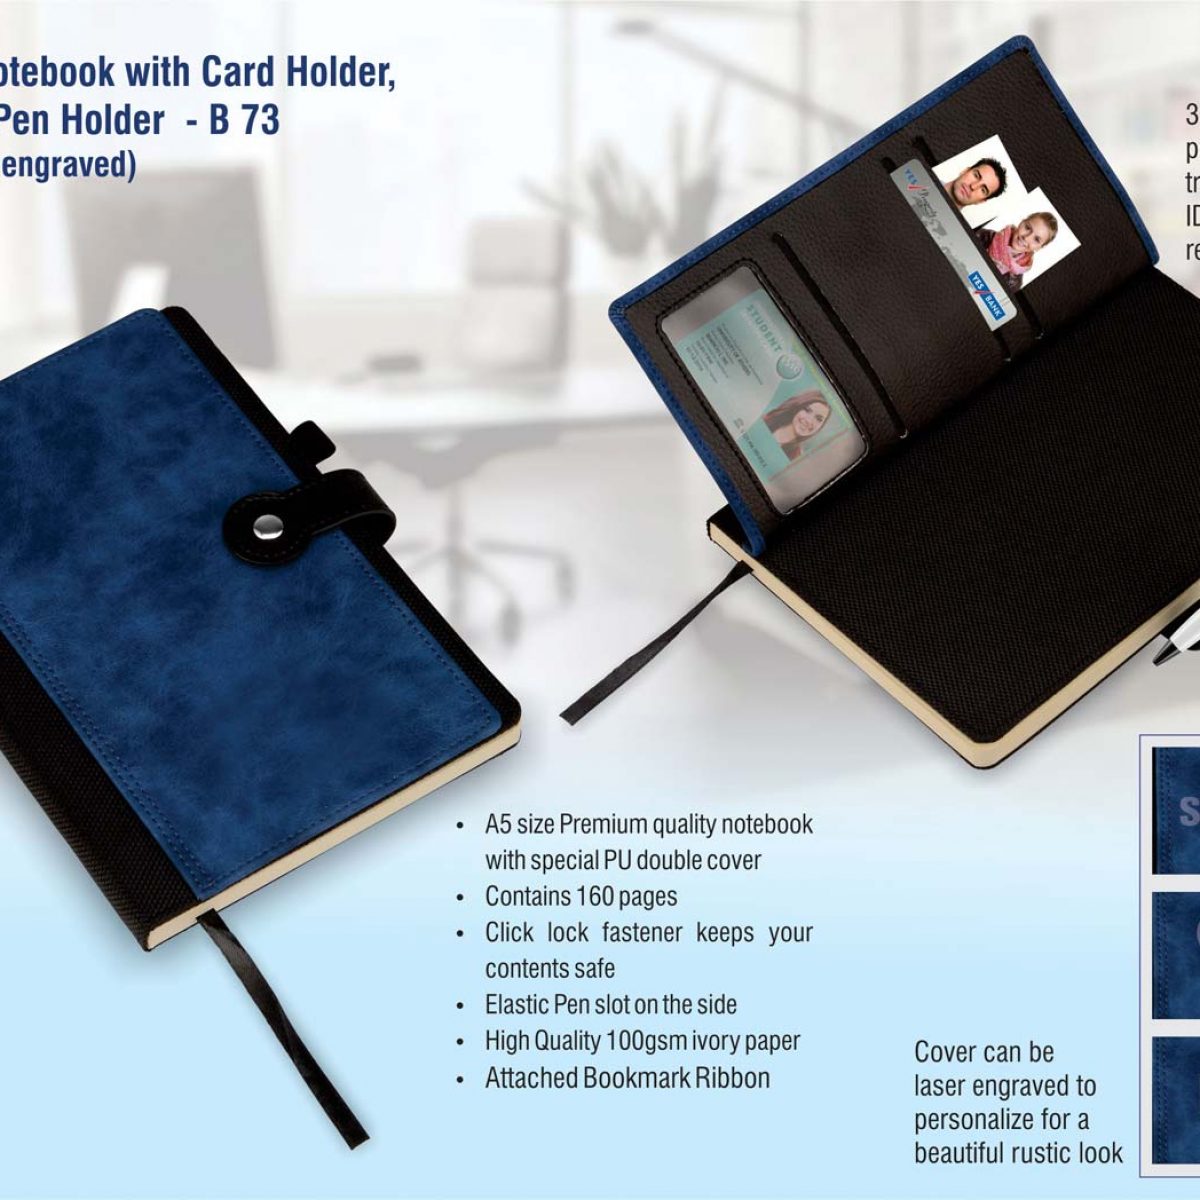 Business Card / Pen Holder Cambridge Business Notebook Cover Large Black Portfolio Refillable 06591 Padfolio 11 x 8-1/2 